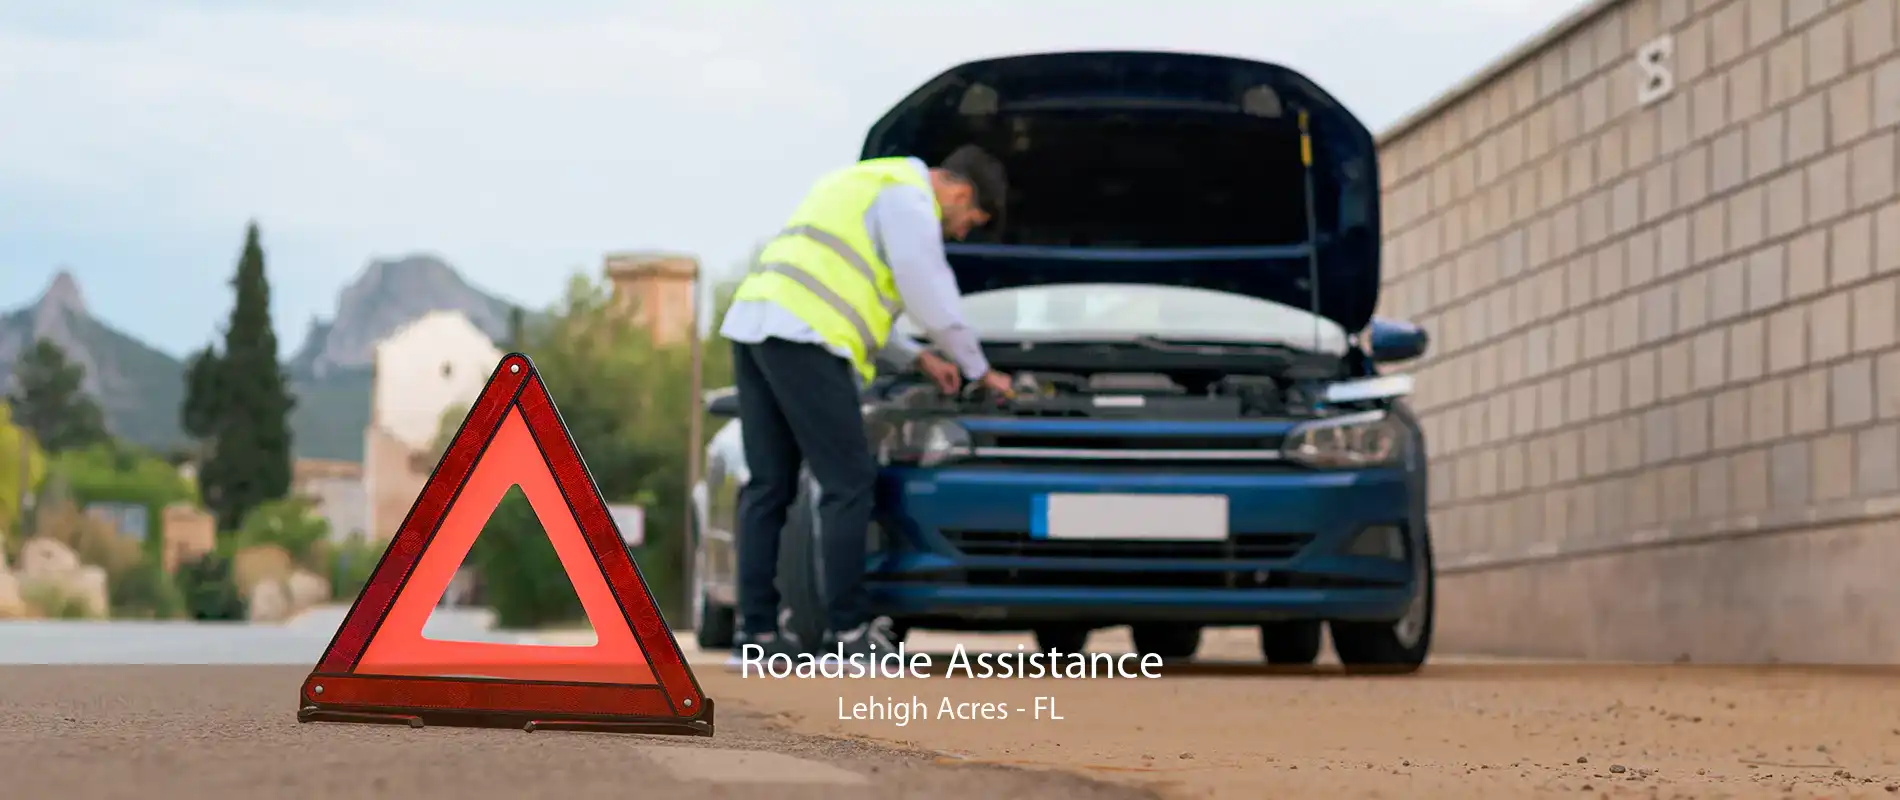 Roadside Assistance Lehigh Acres - FL